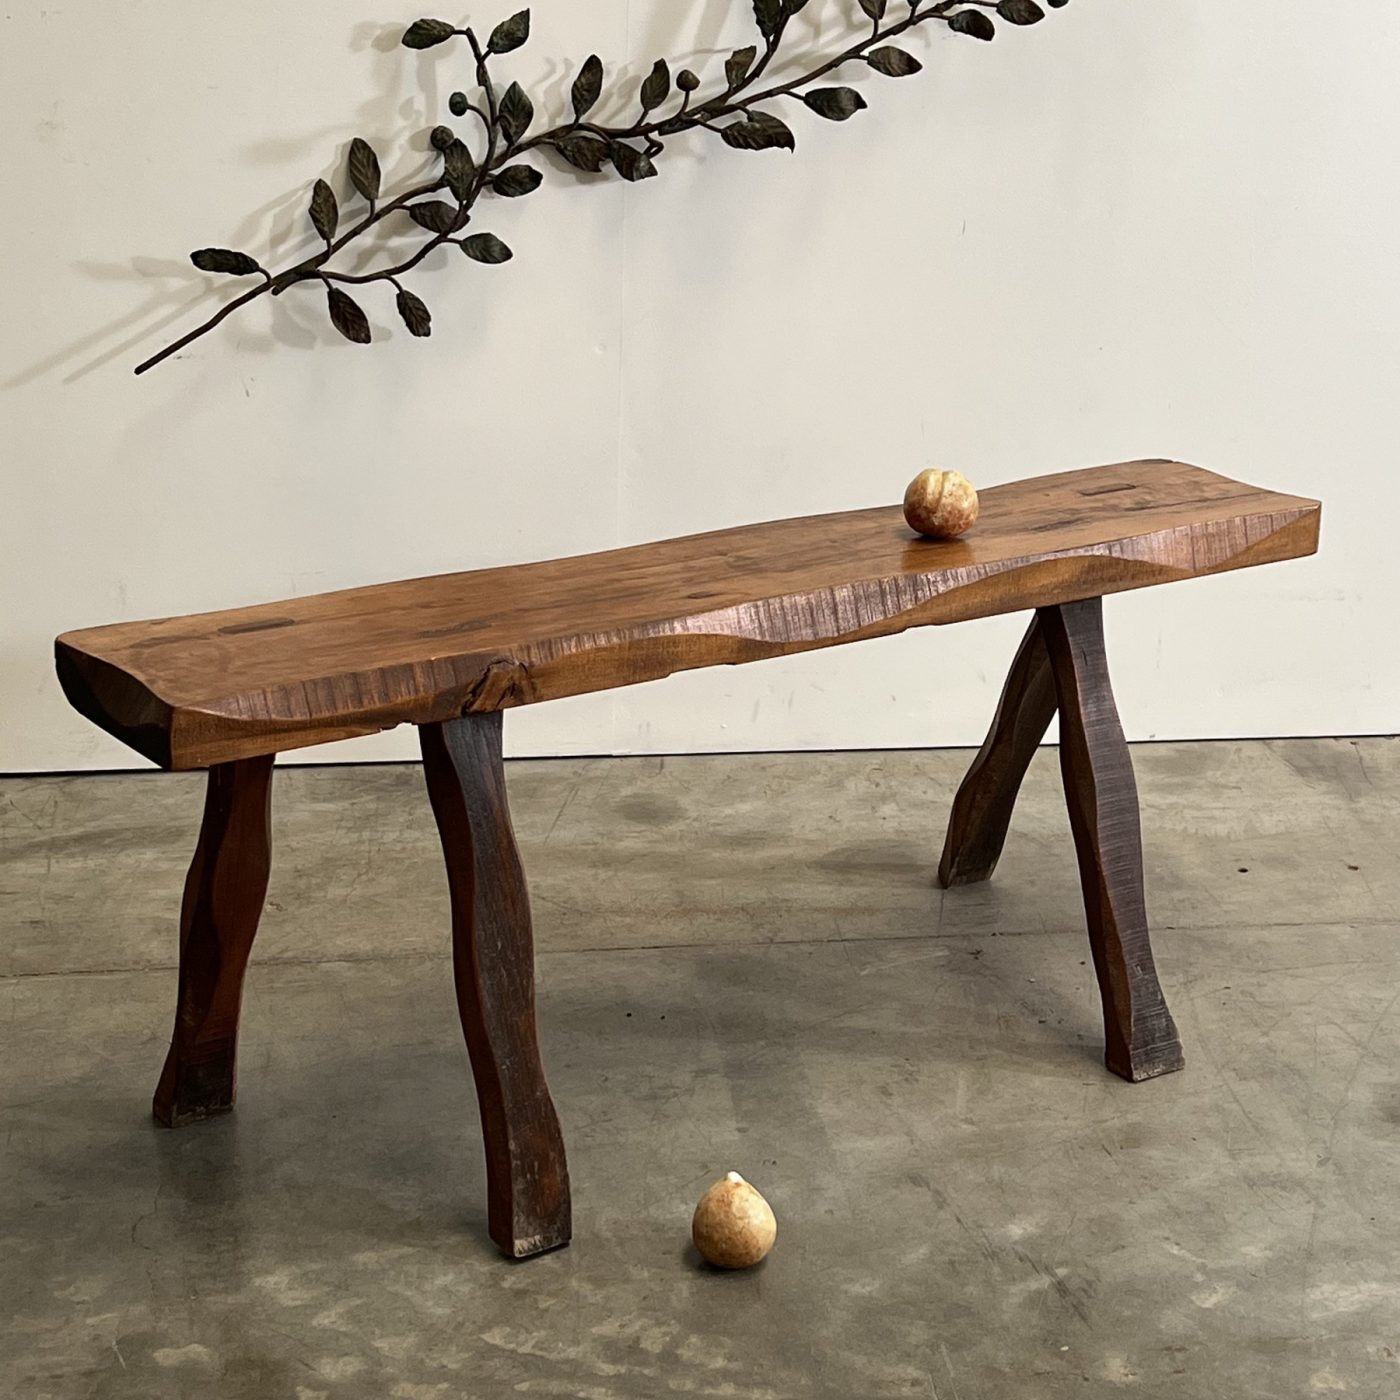 objet-vagabond-wooden-bench0001